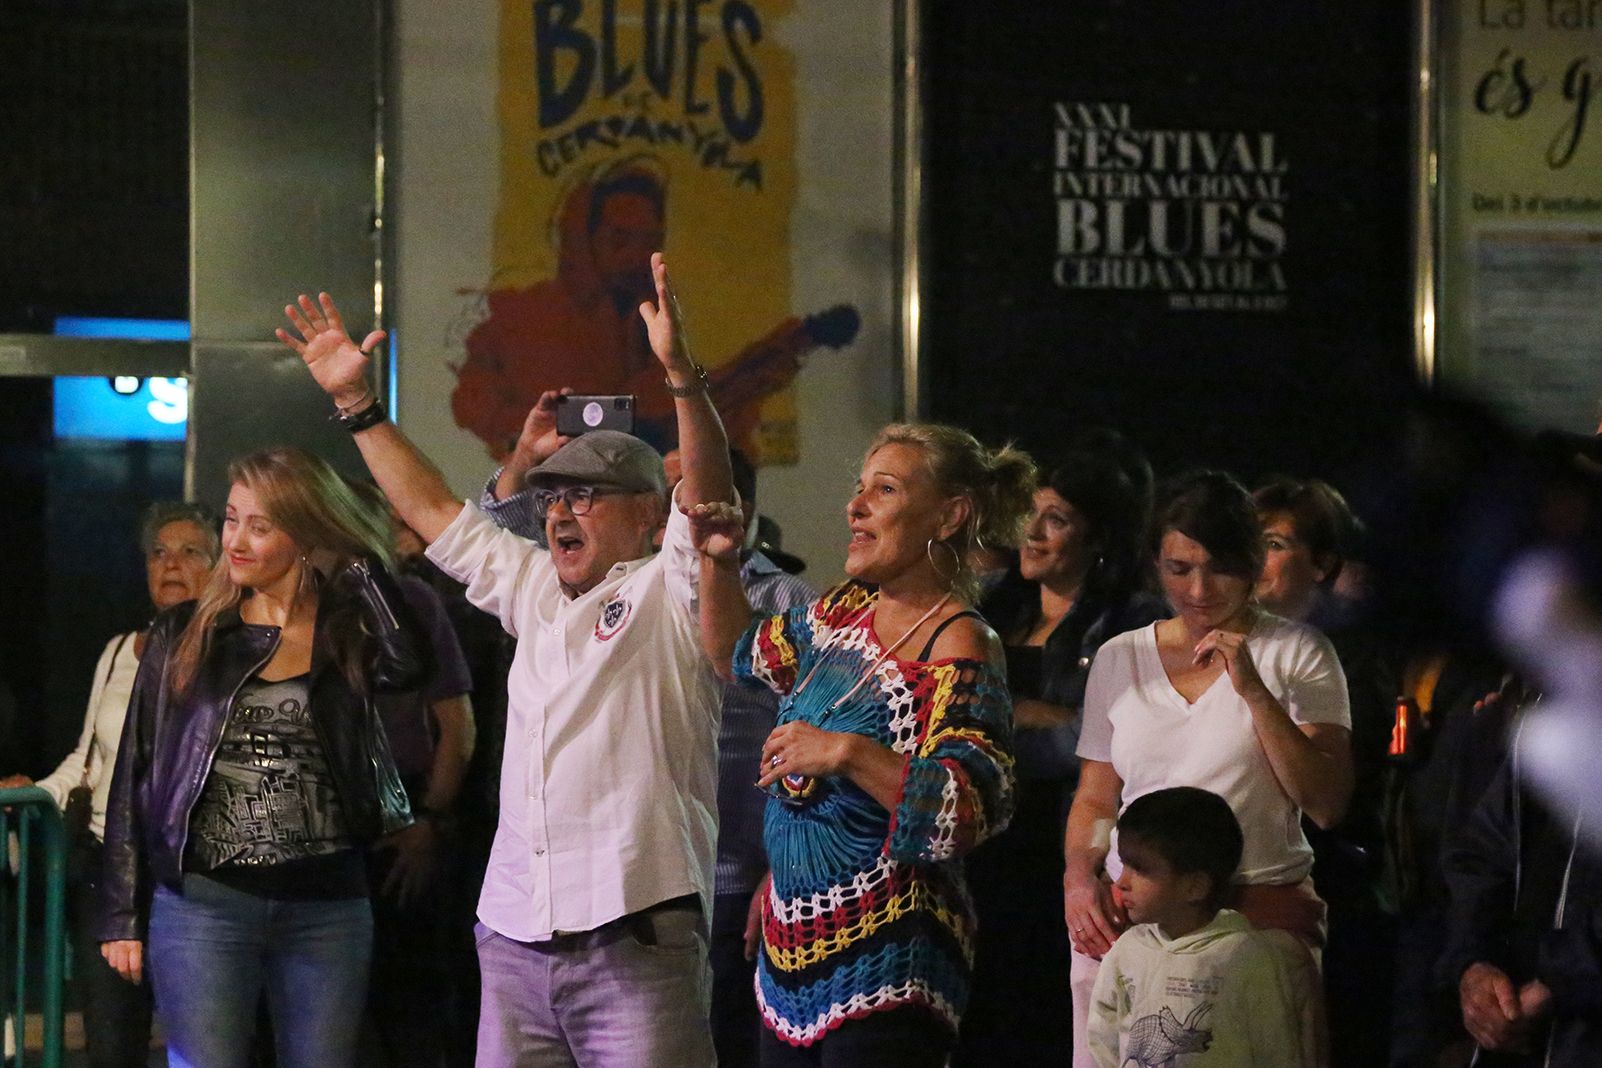 Concert de Mr. Dynamite James Brown Experience al Festival de Blues. FOTO: Anna Bassa